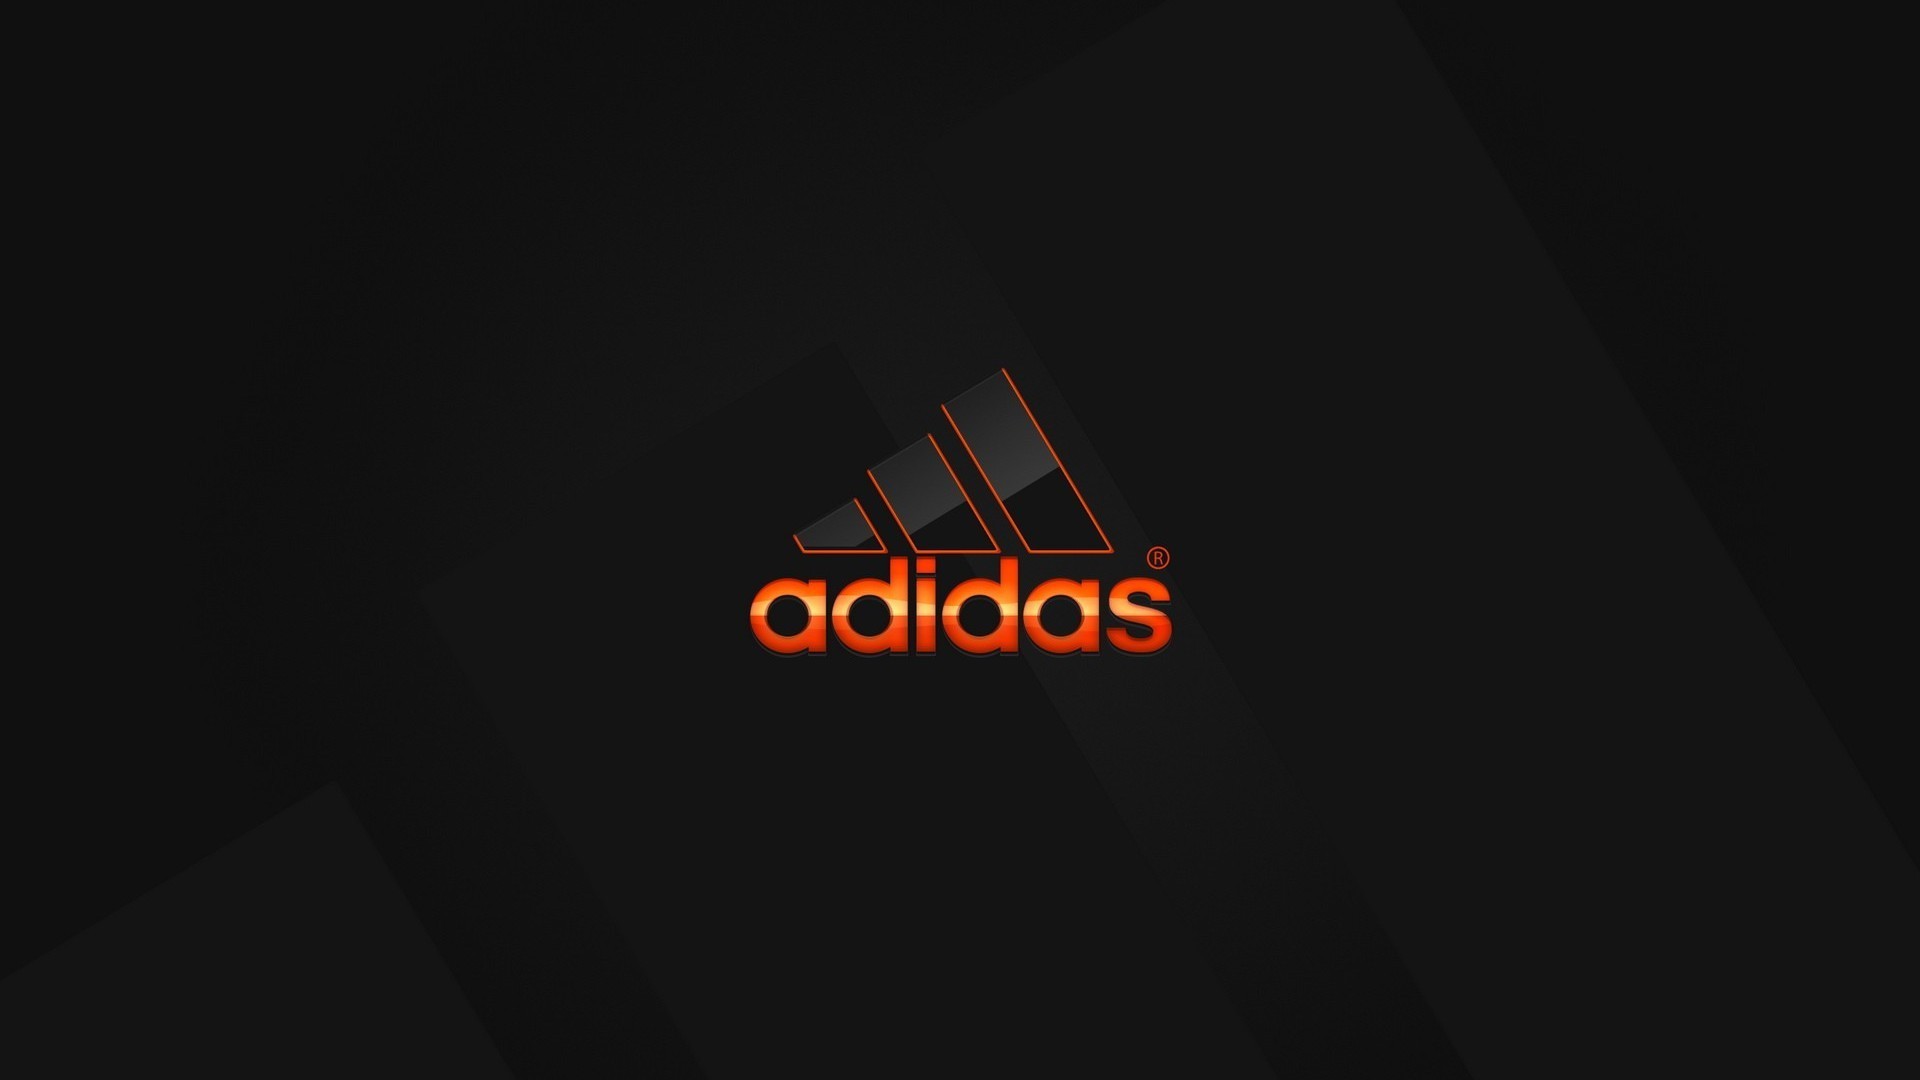 1920x1080 Adidas Logo Wallpaper HD Free Download.